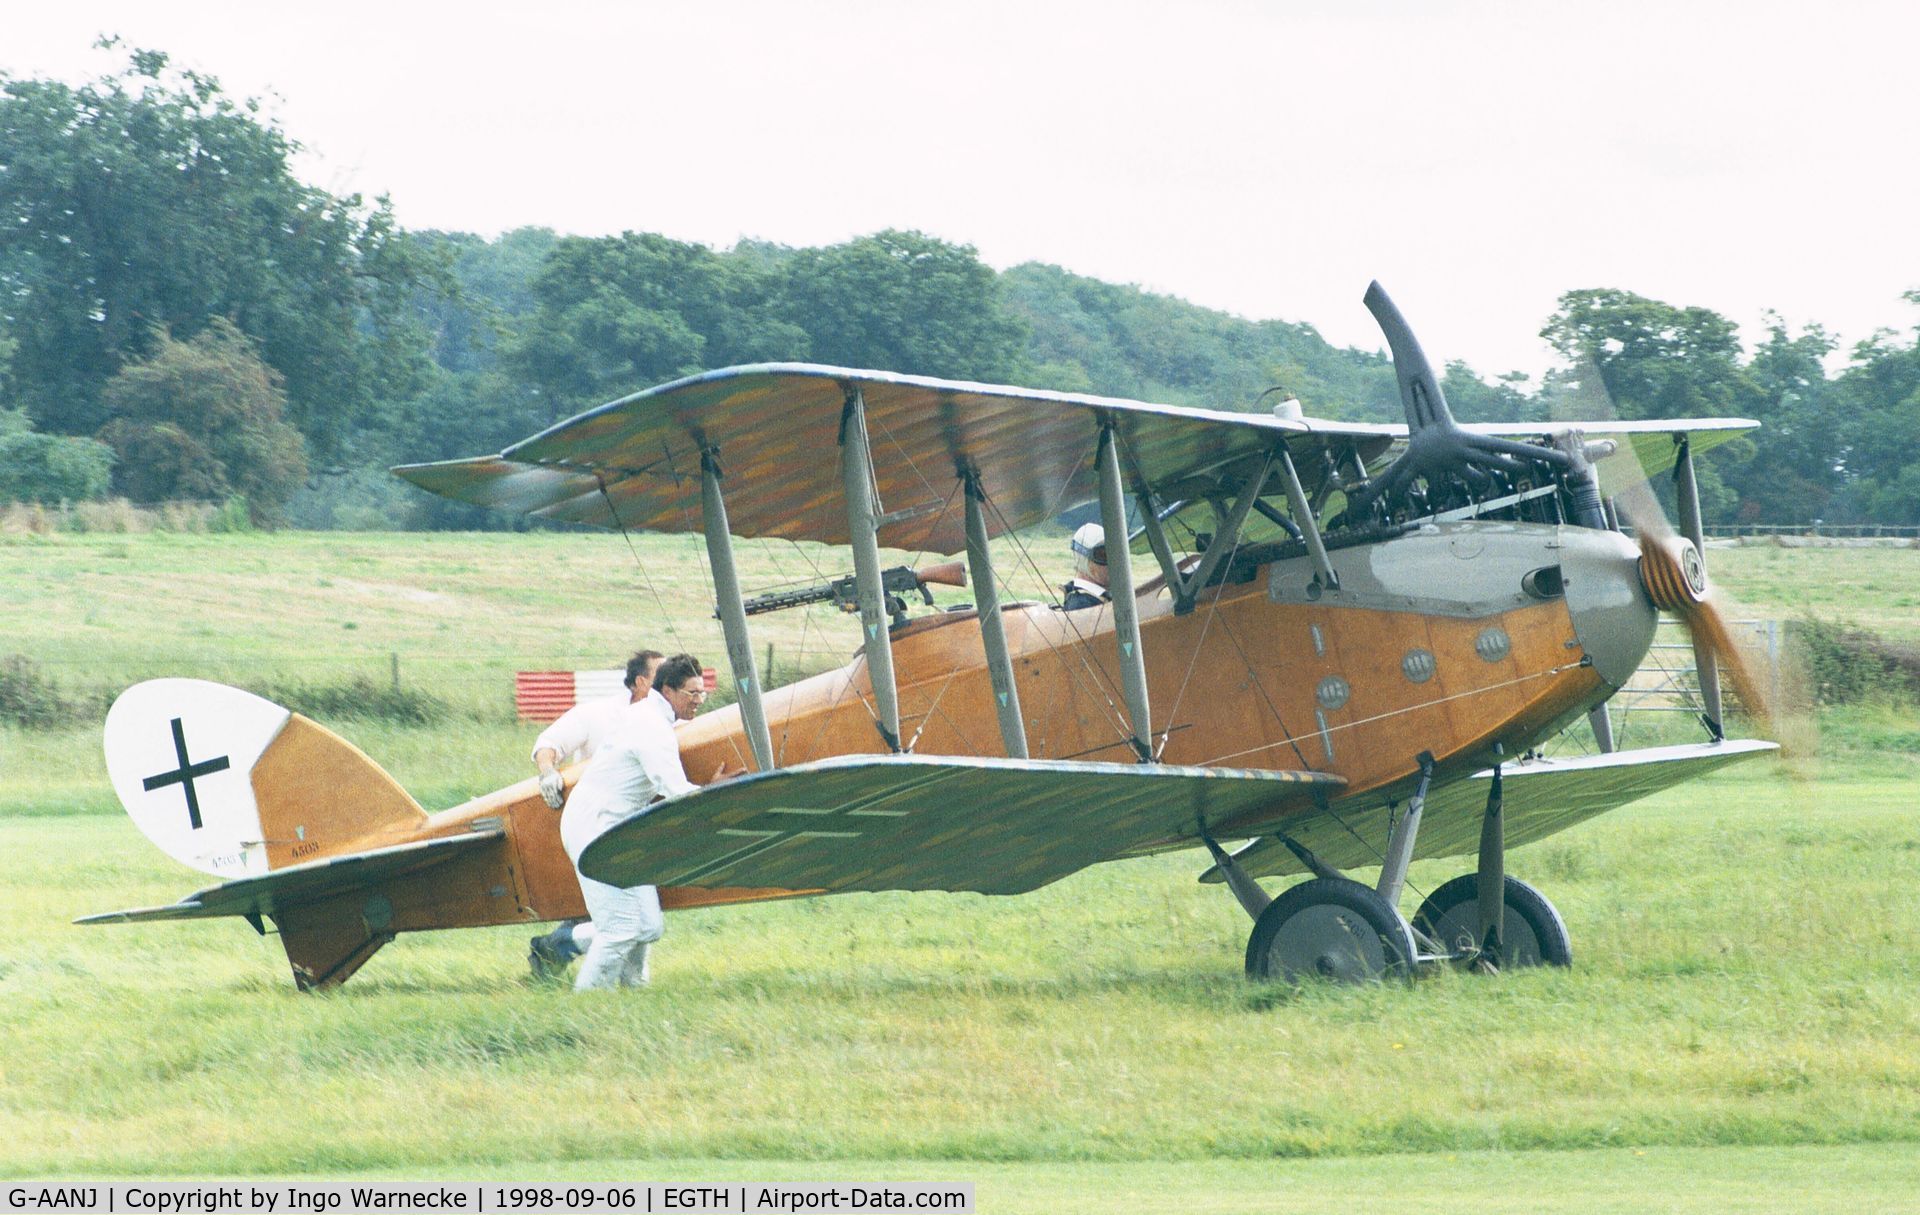 G-AANJ, 1918 LVG C.VI C/N 4503, Luftverkehrs-Gesellschaft L.V.G. C VI at the 1998 Shuttleworth Pageant